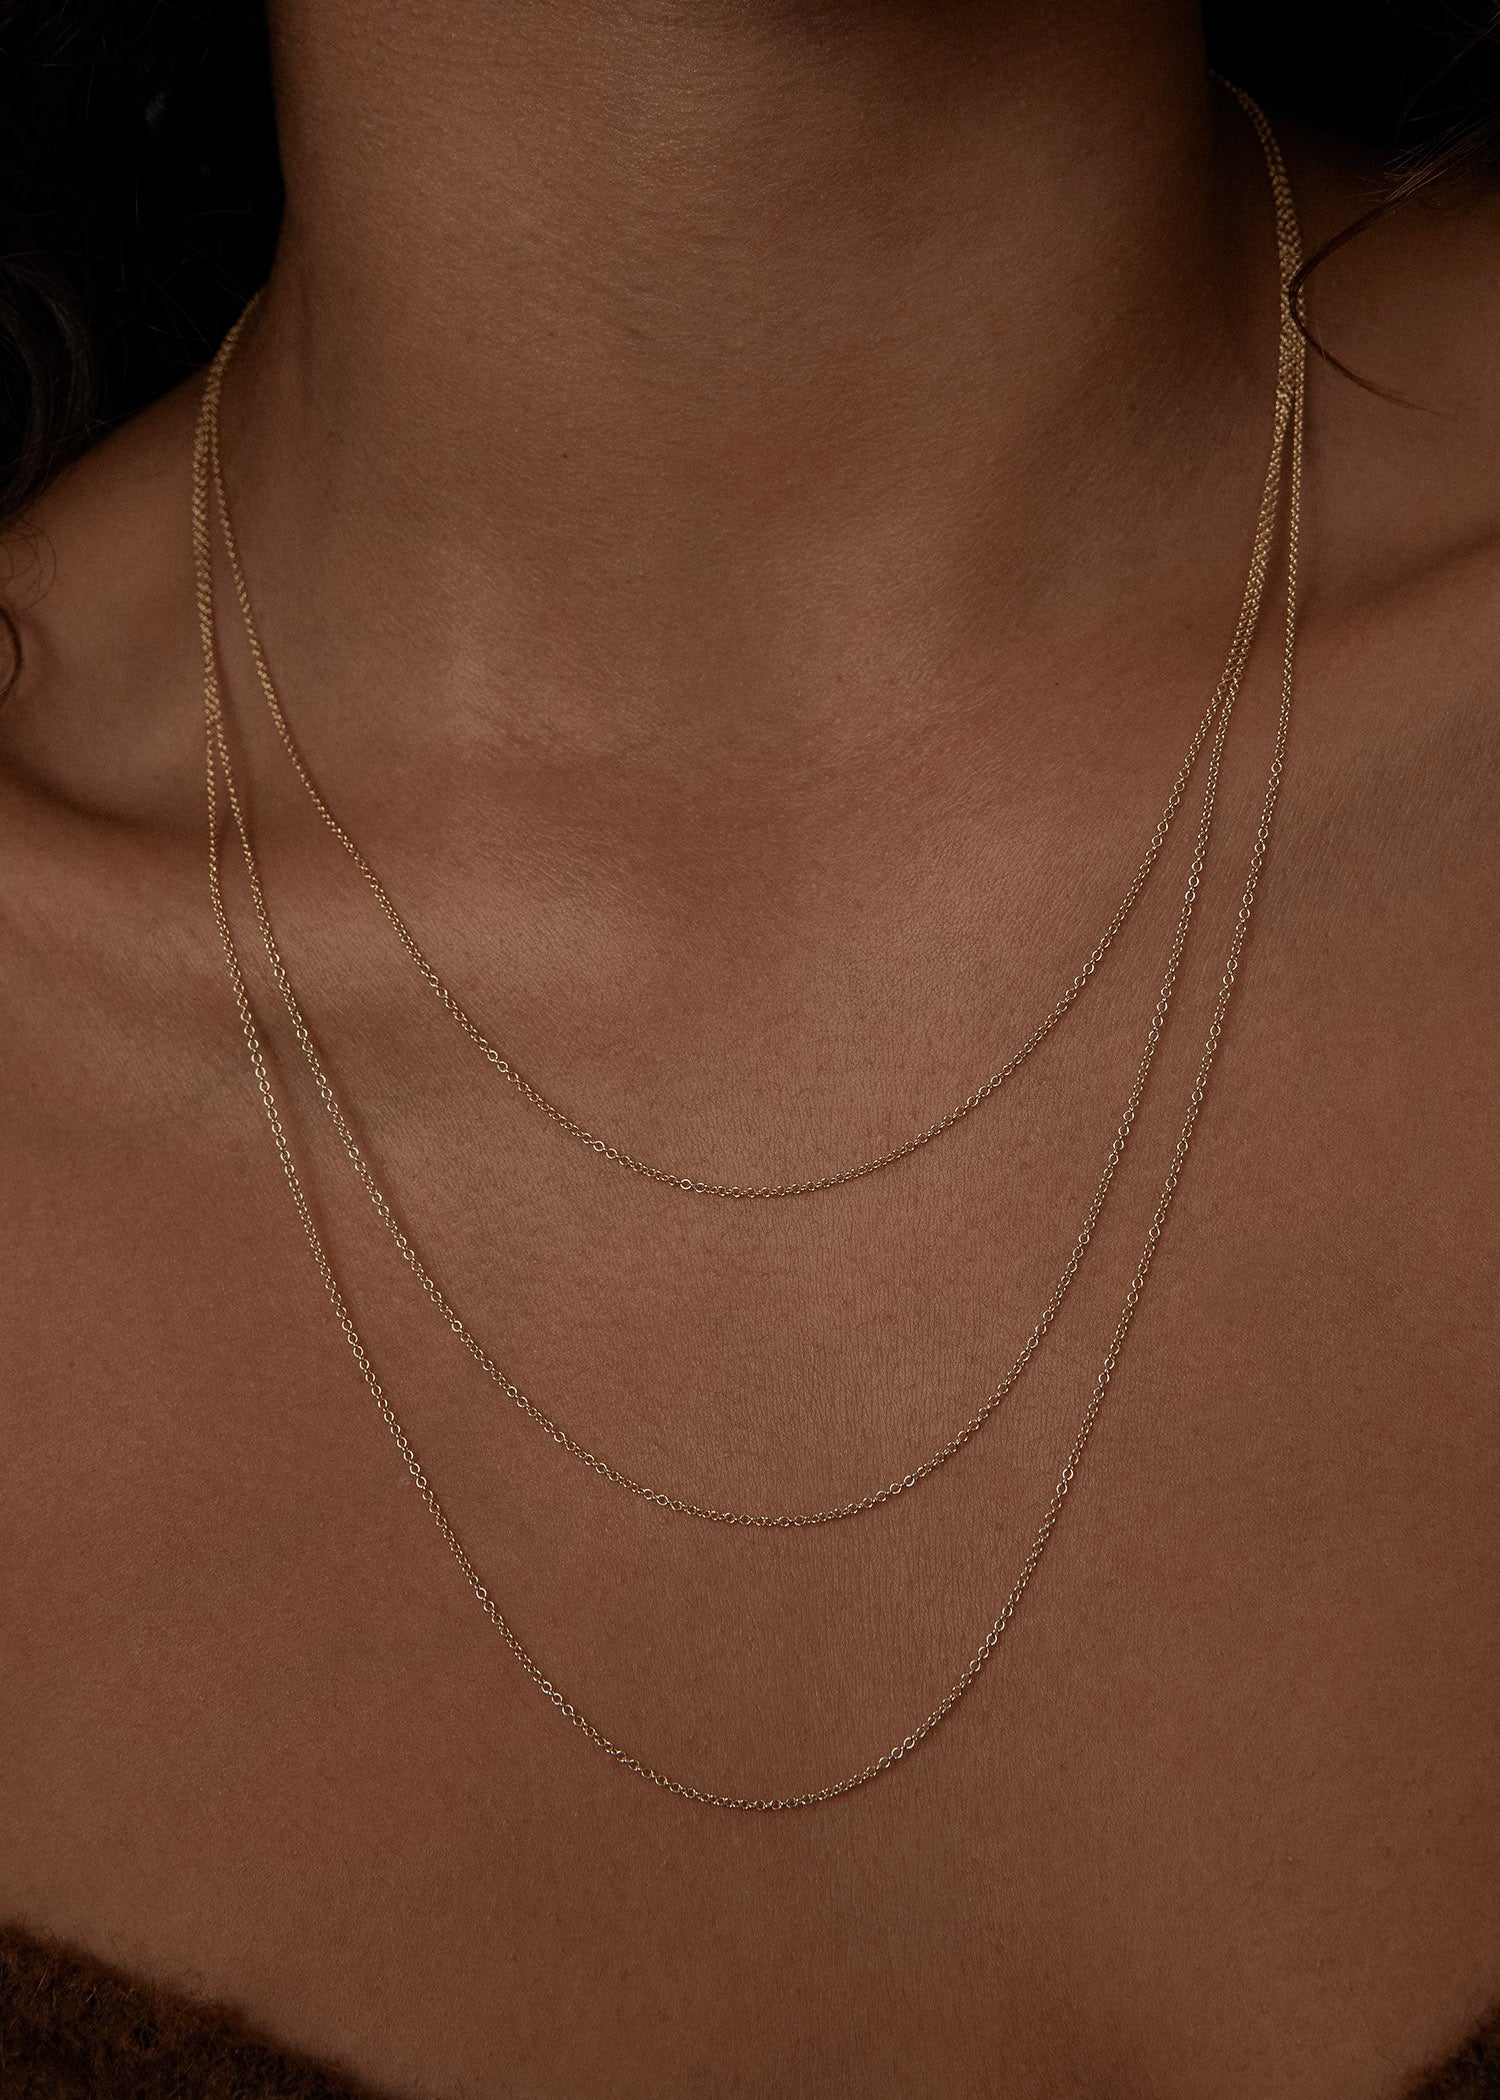 alt="Rolo Link Chain Necklace"